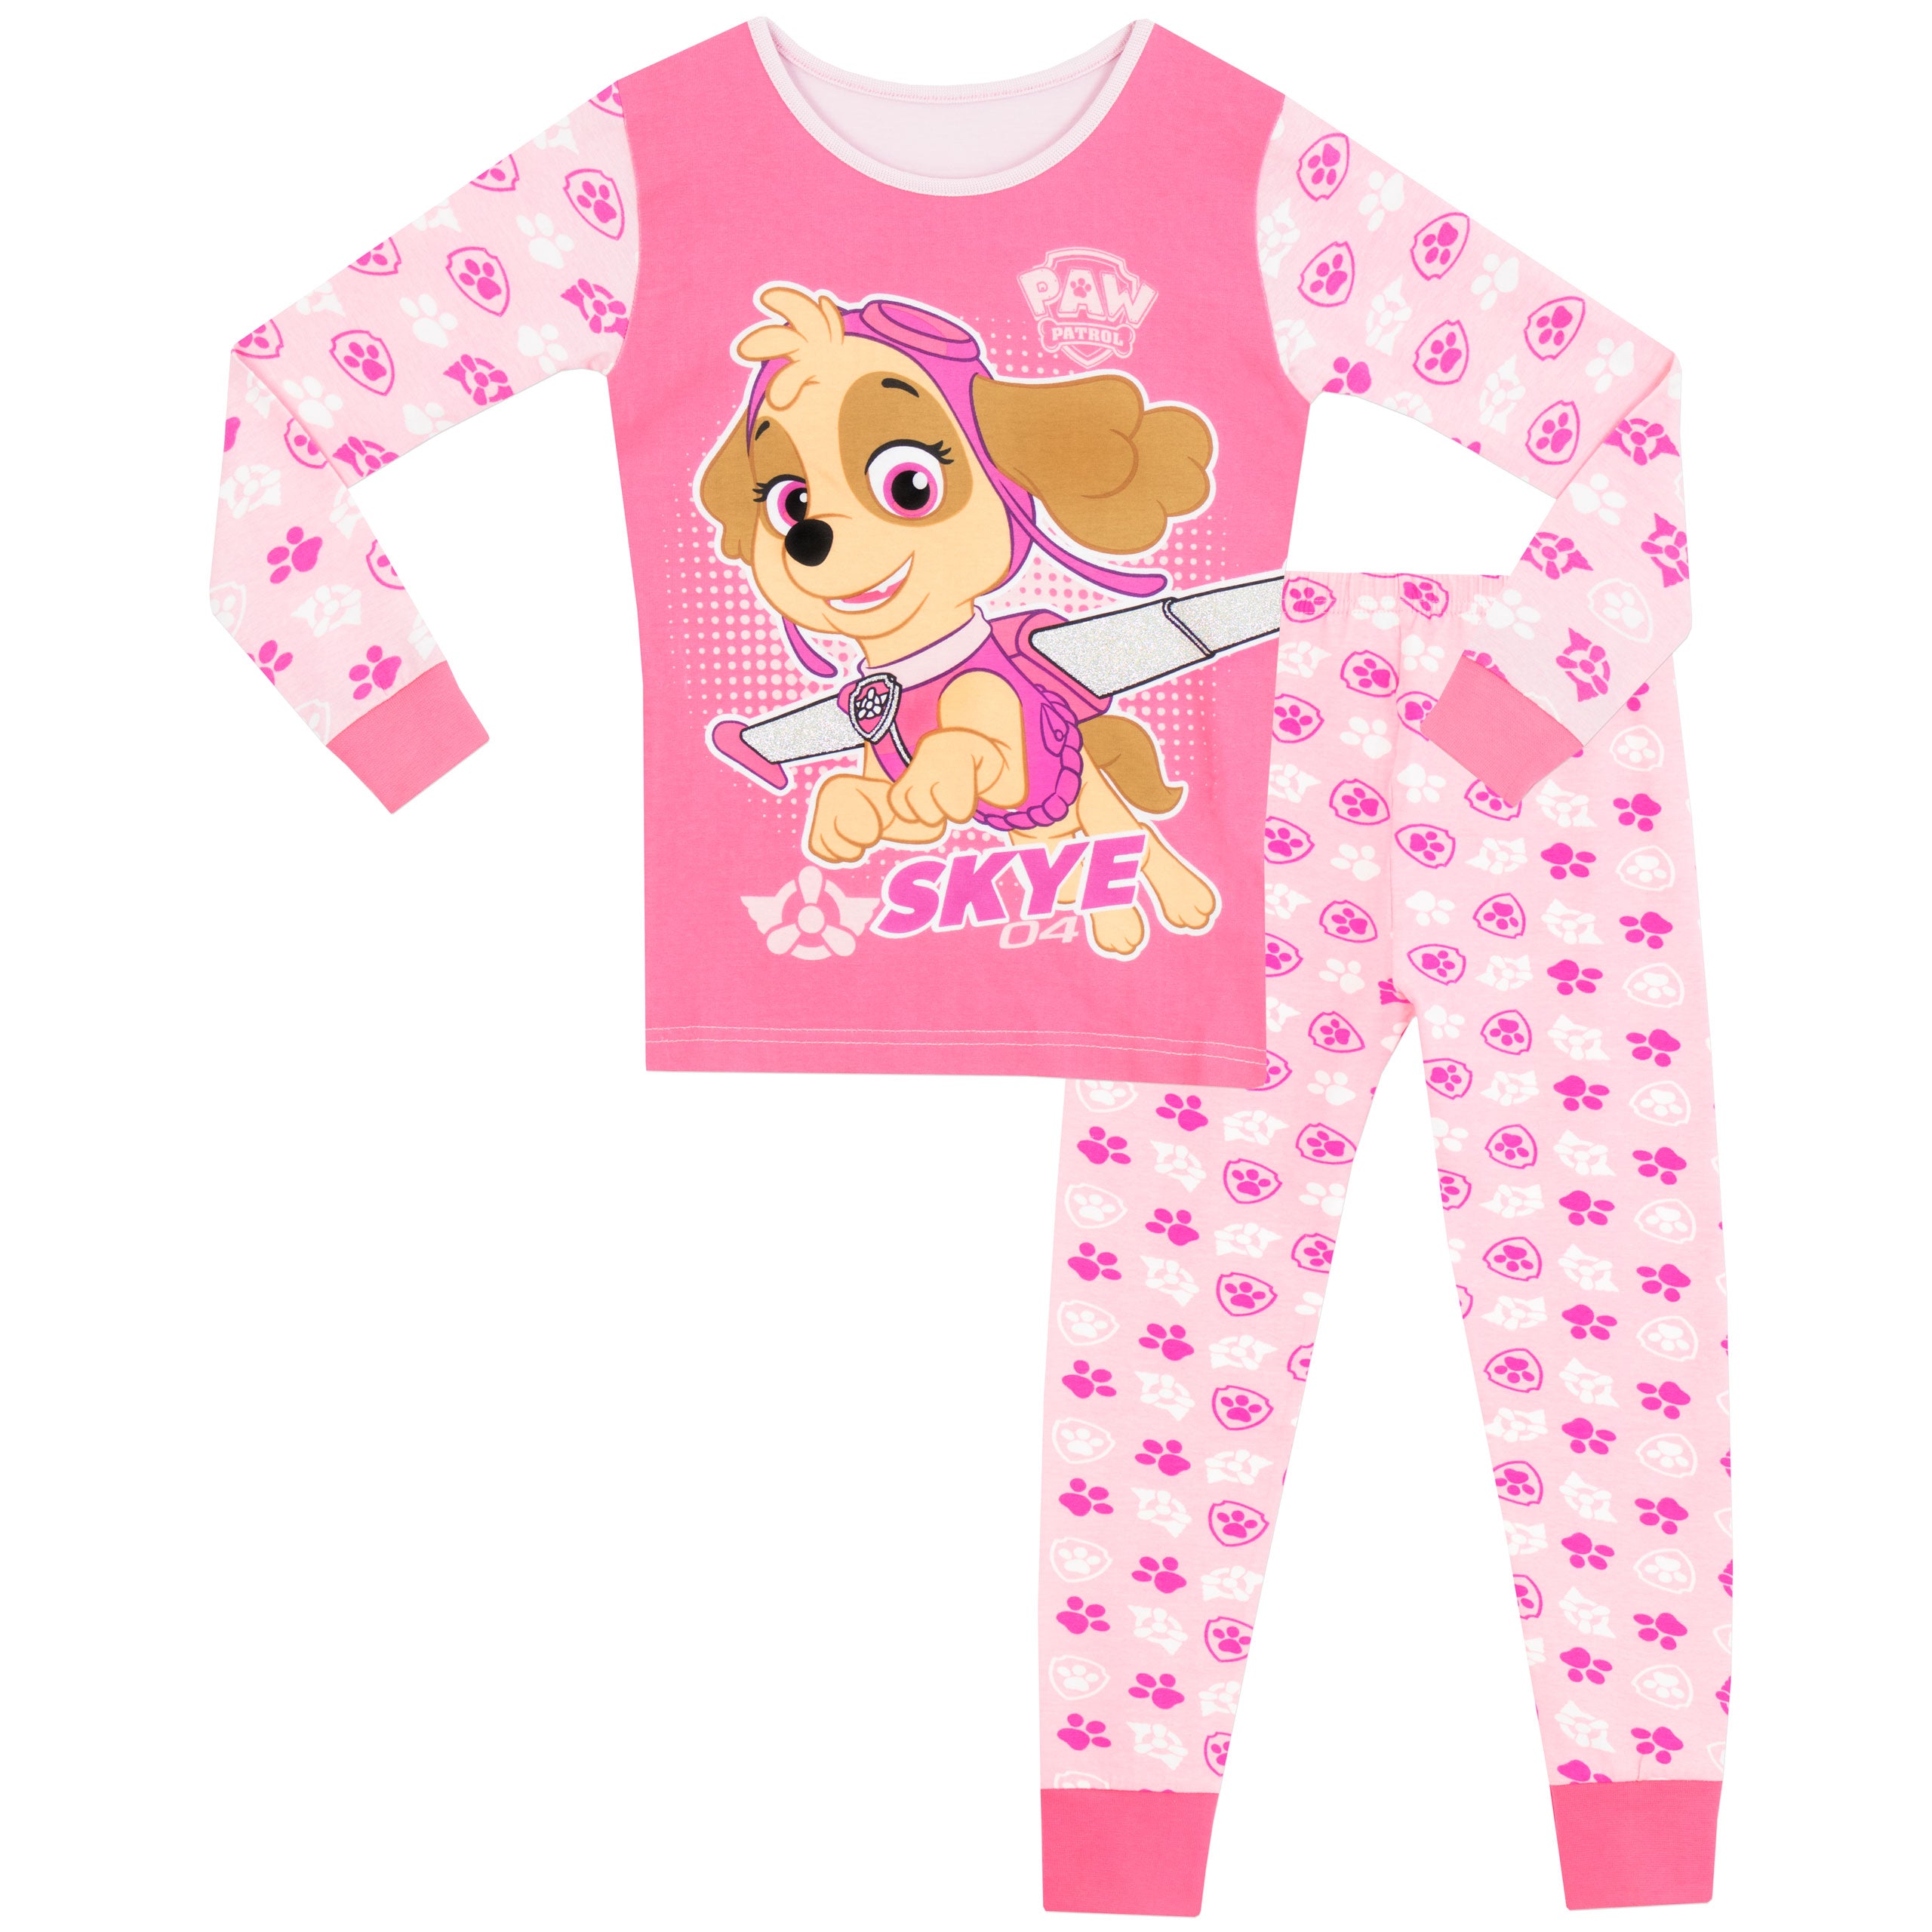 Buy Paw Patrol Pajamas Kids Character.com Official Merch